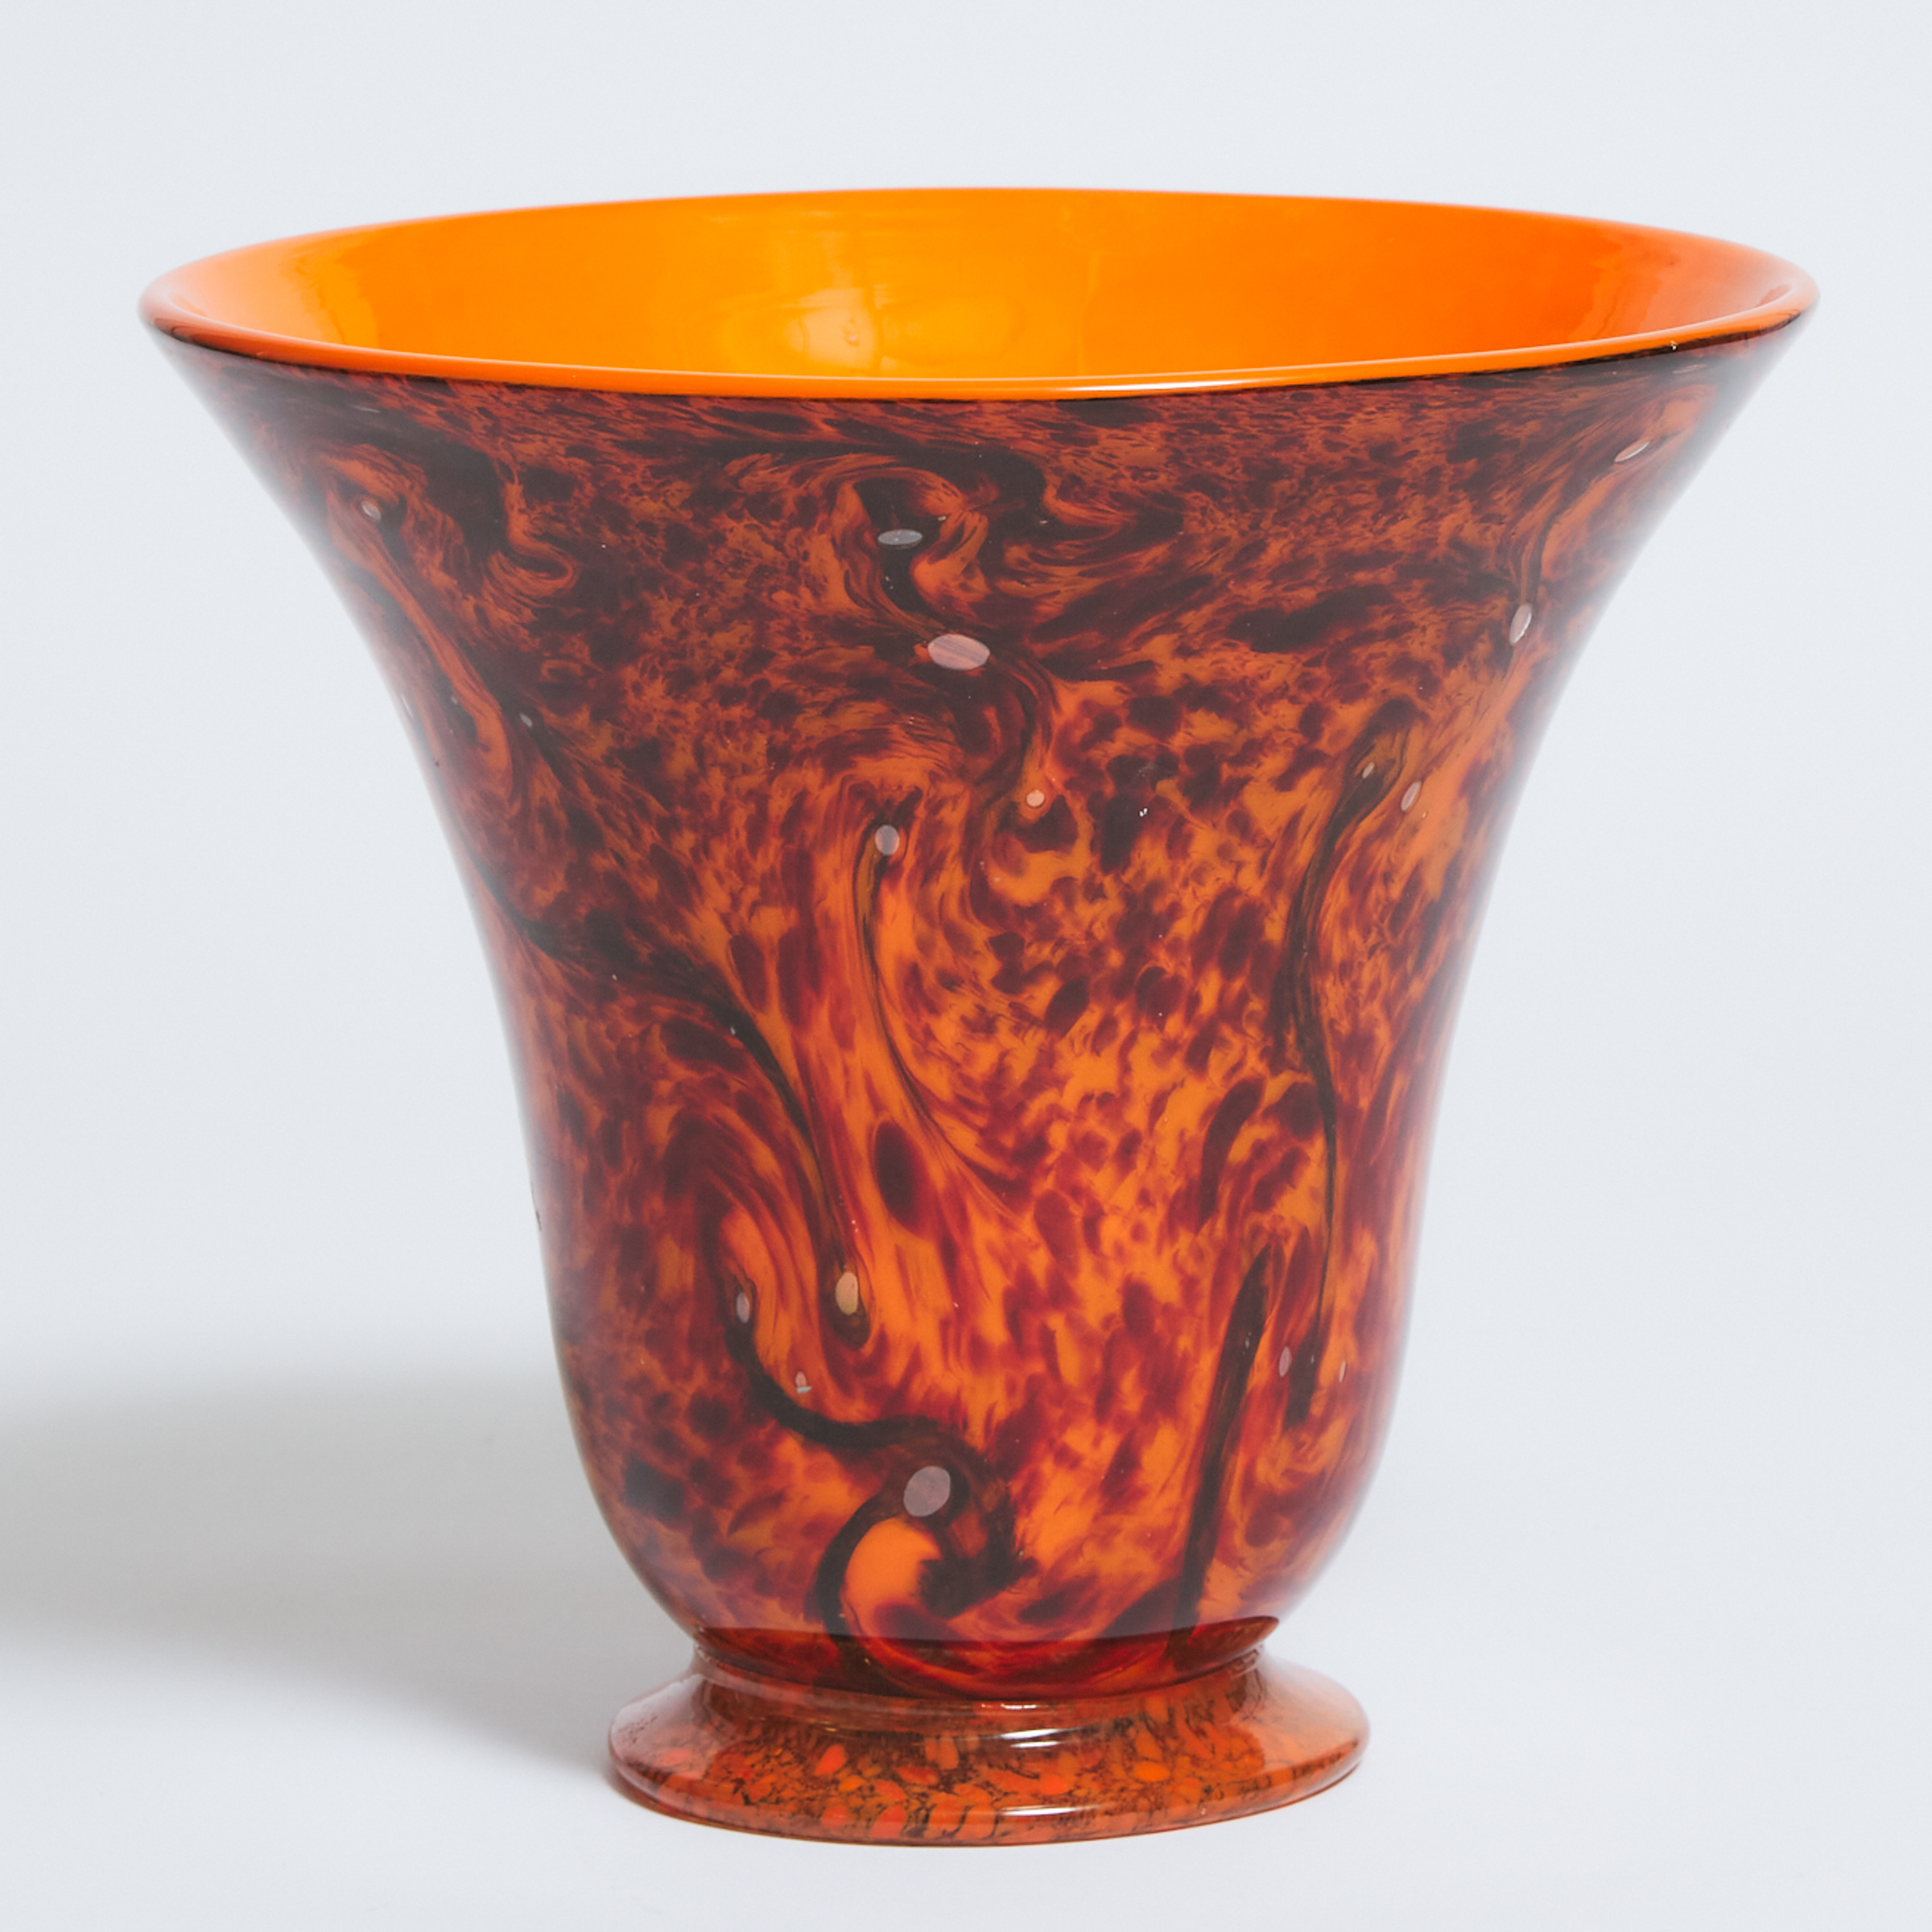 Monart Mottled Orange and Brown Glass Vase, c.1930